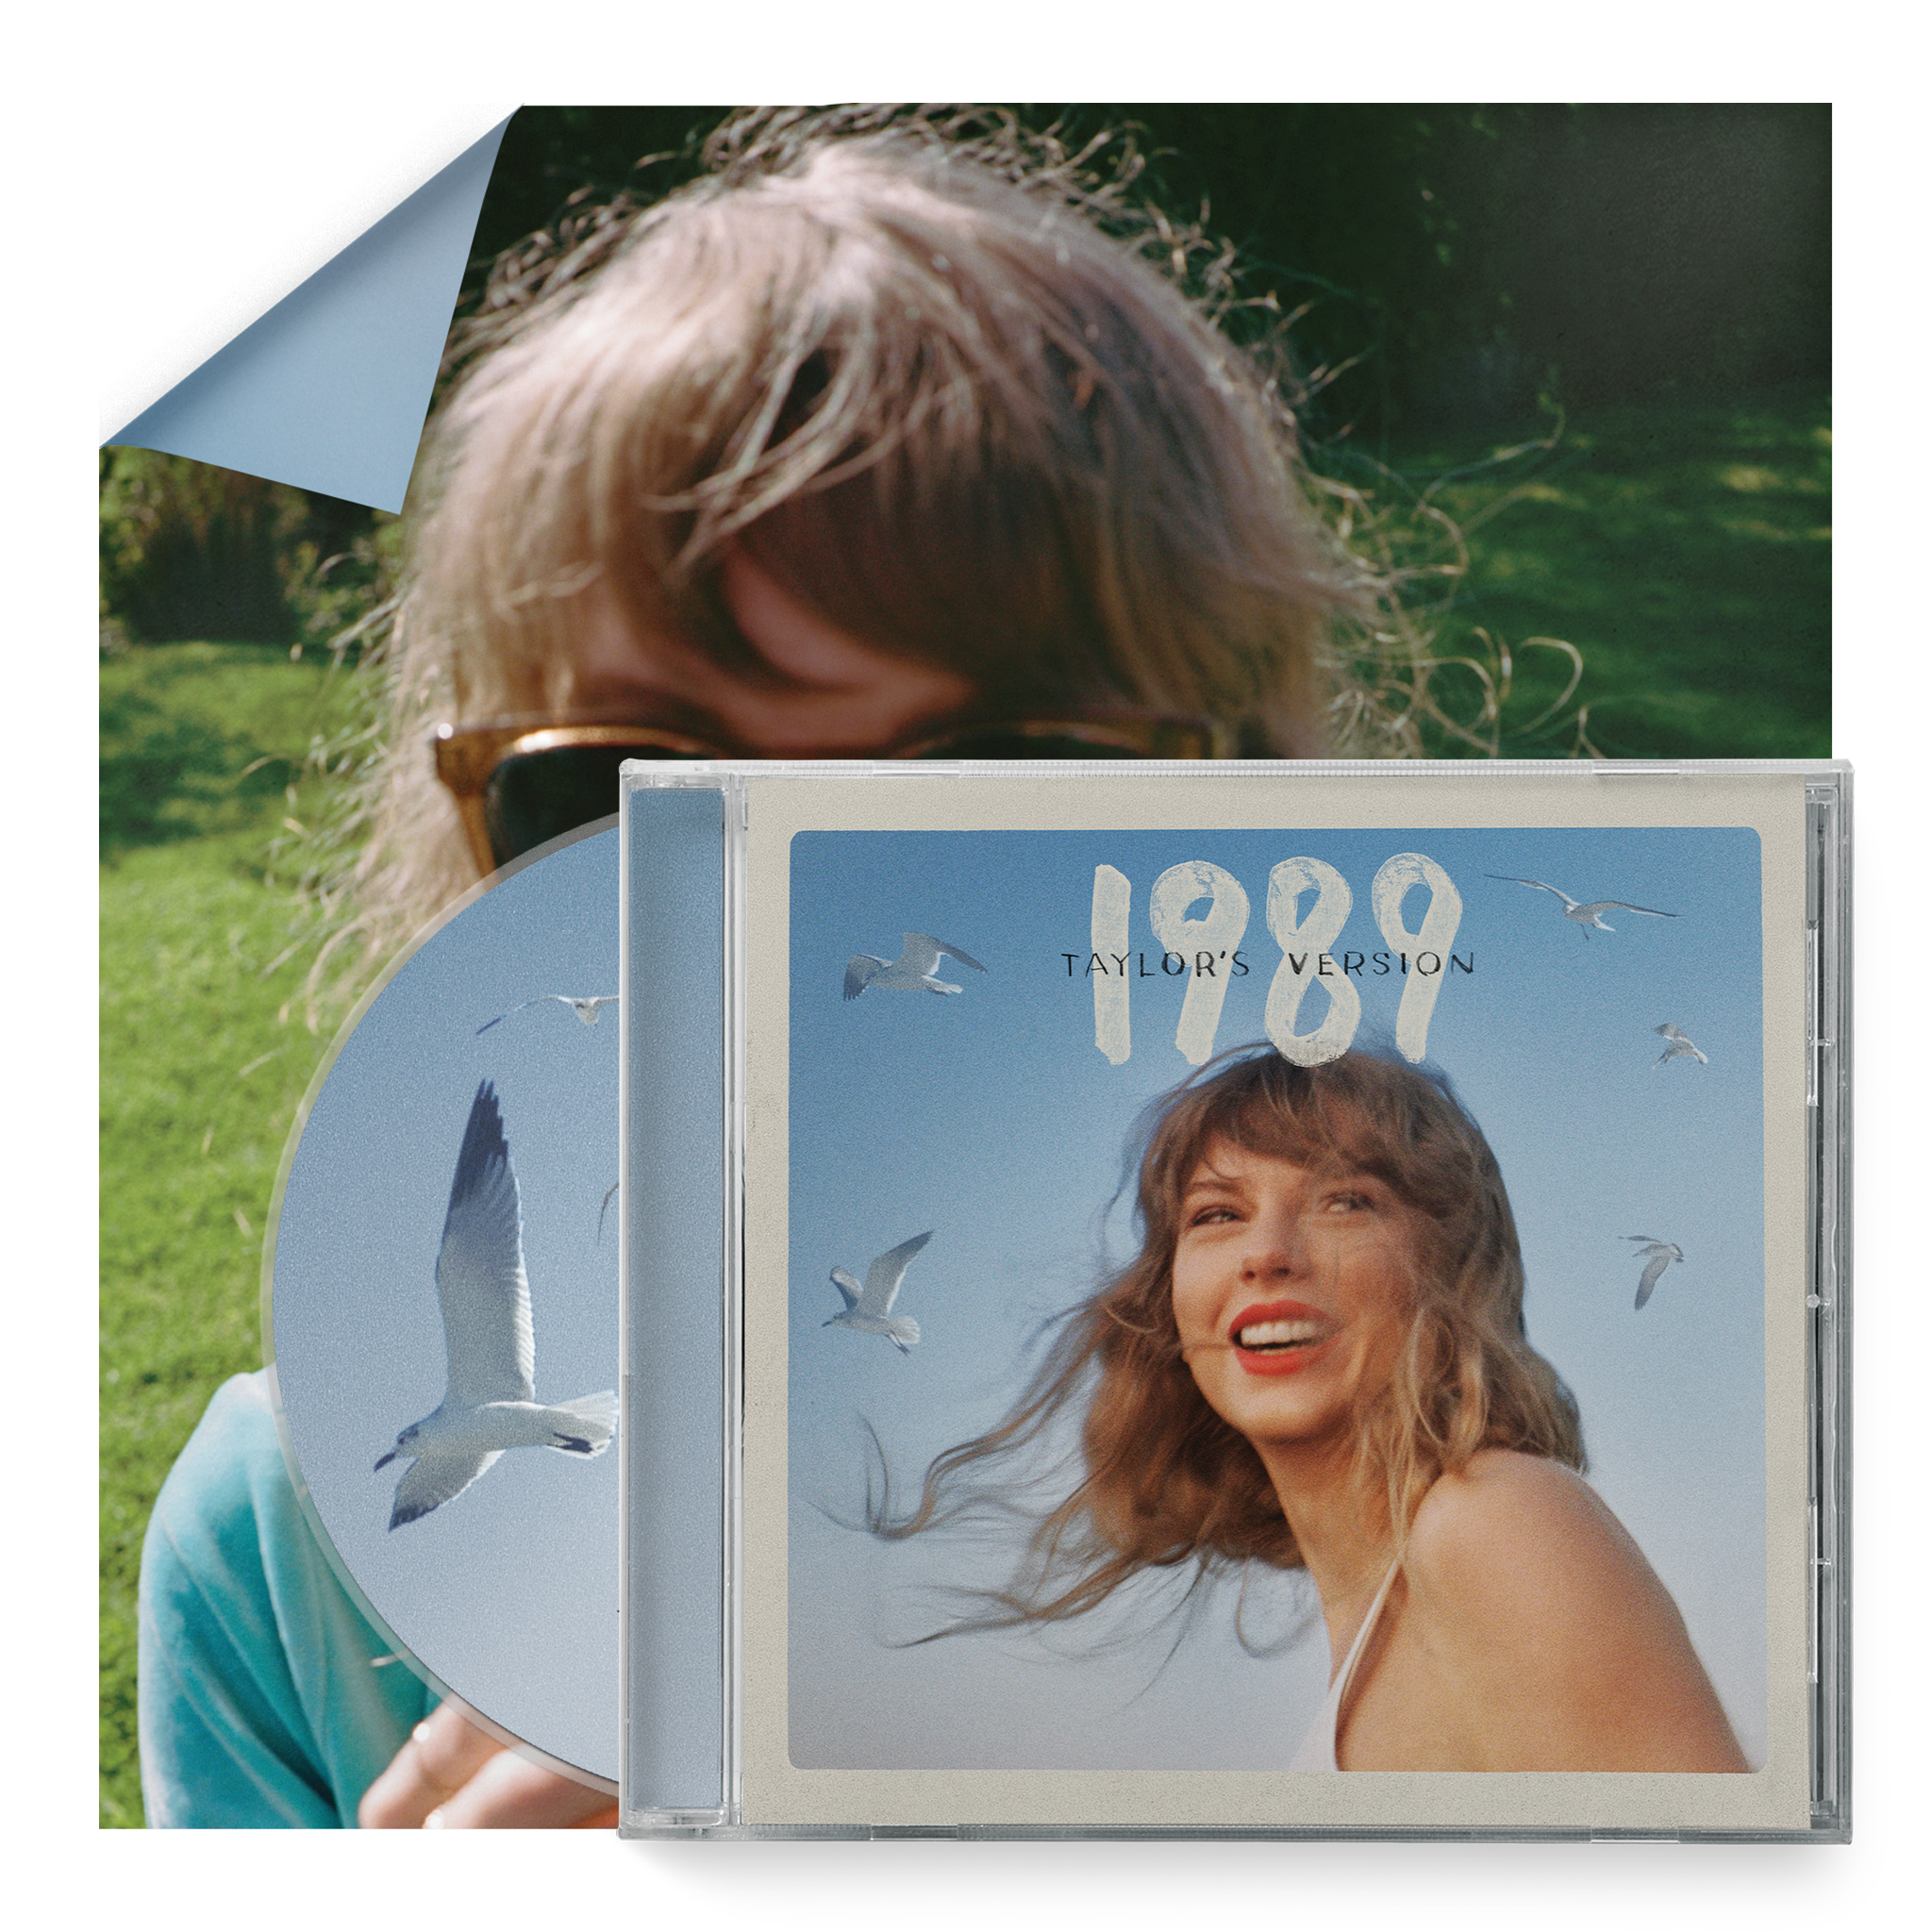 1989 (Taylor's Version) CD  Taylor Swift Official AU Store – Taylor Swift  Official Store AU